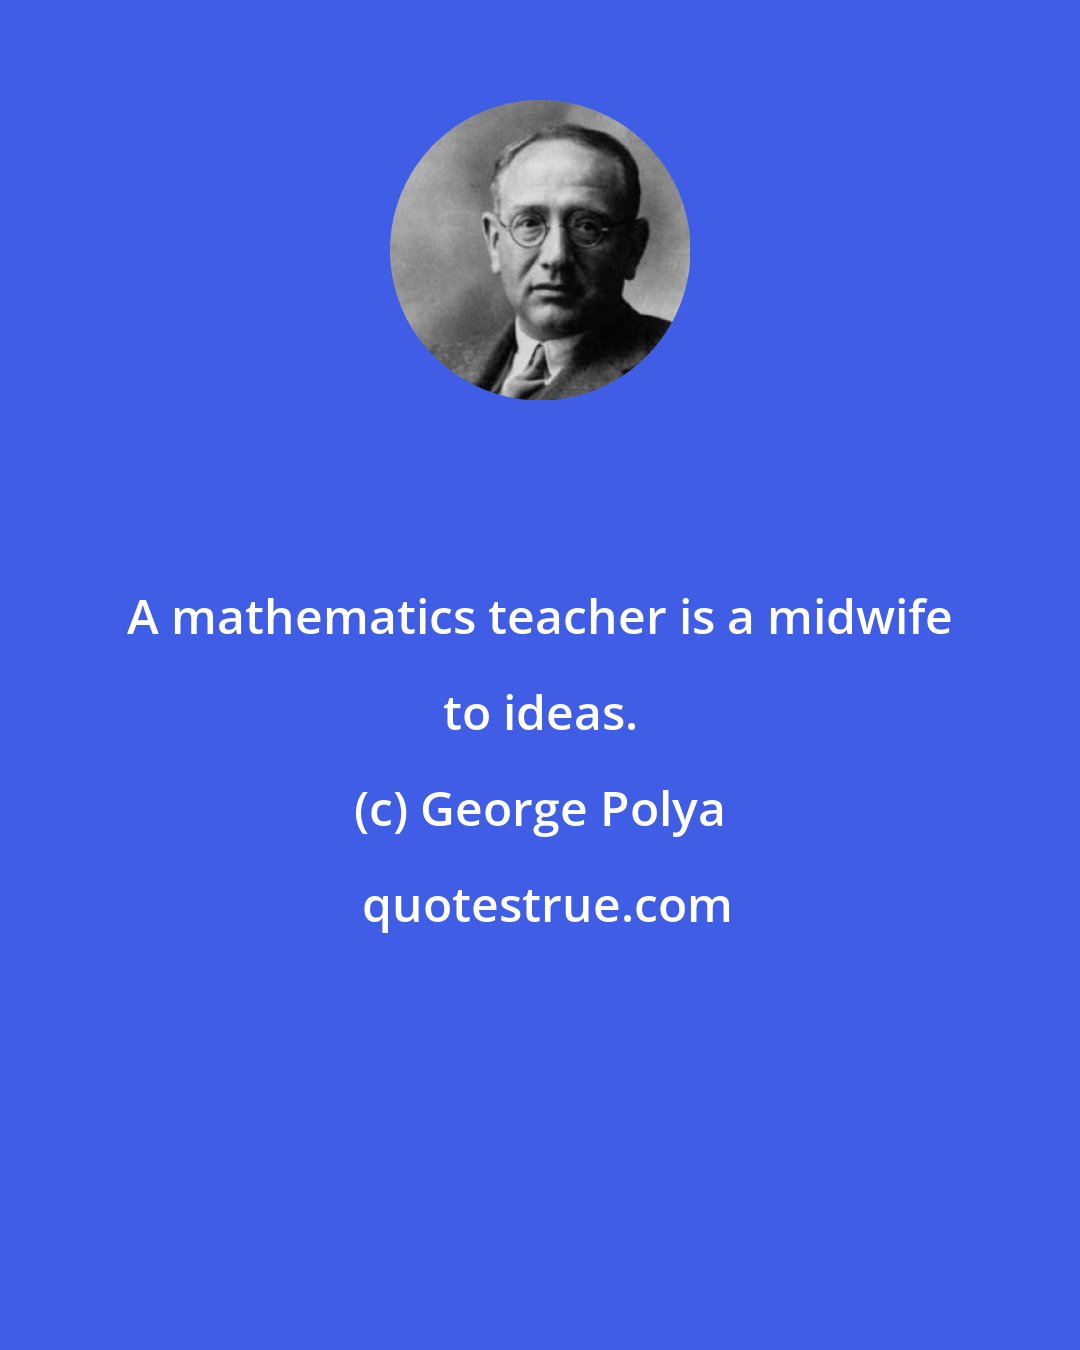 George Polya: A mathematics teacher is a midwife to ideas.